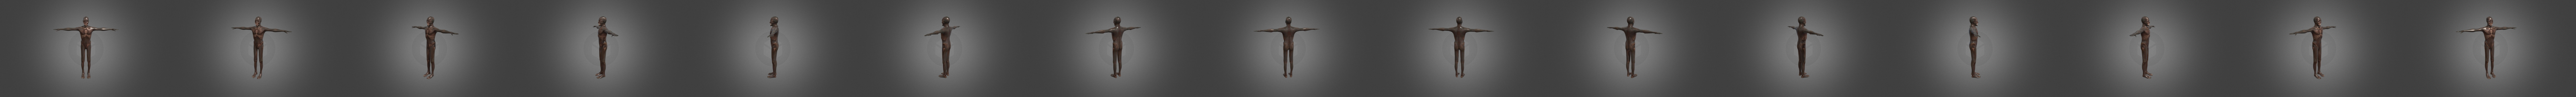 SCP-106 - Download Free 3D model by artandgamesscp (@artandgamesscp)  [a483916]